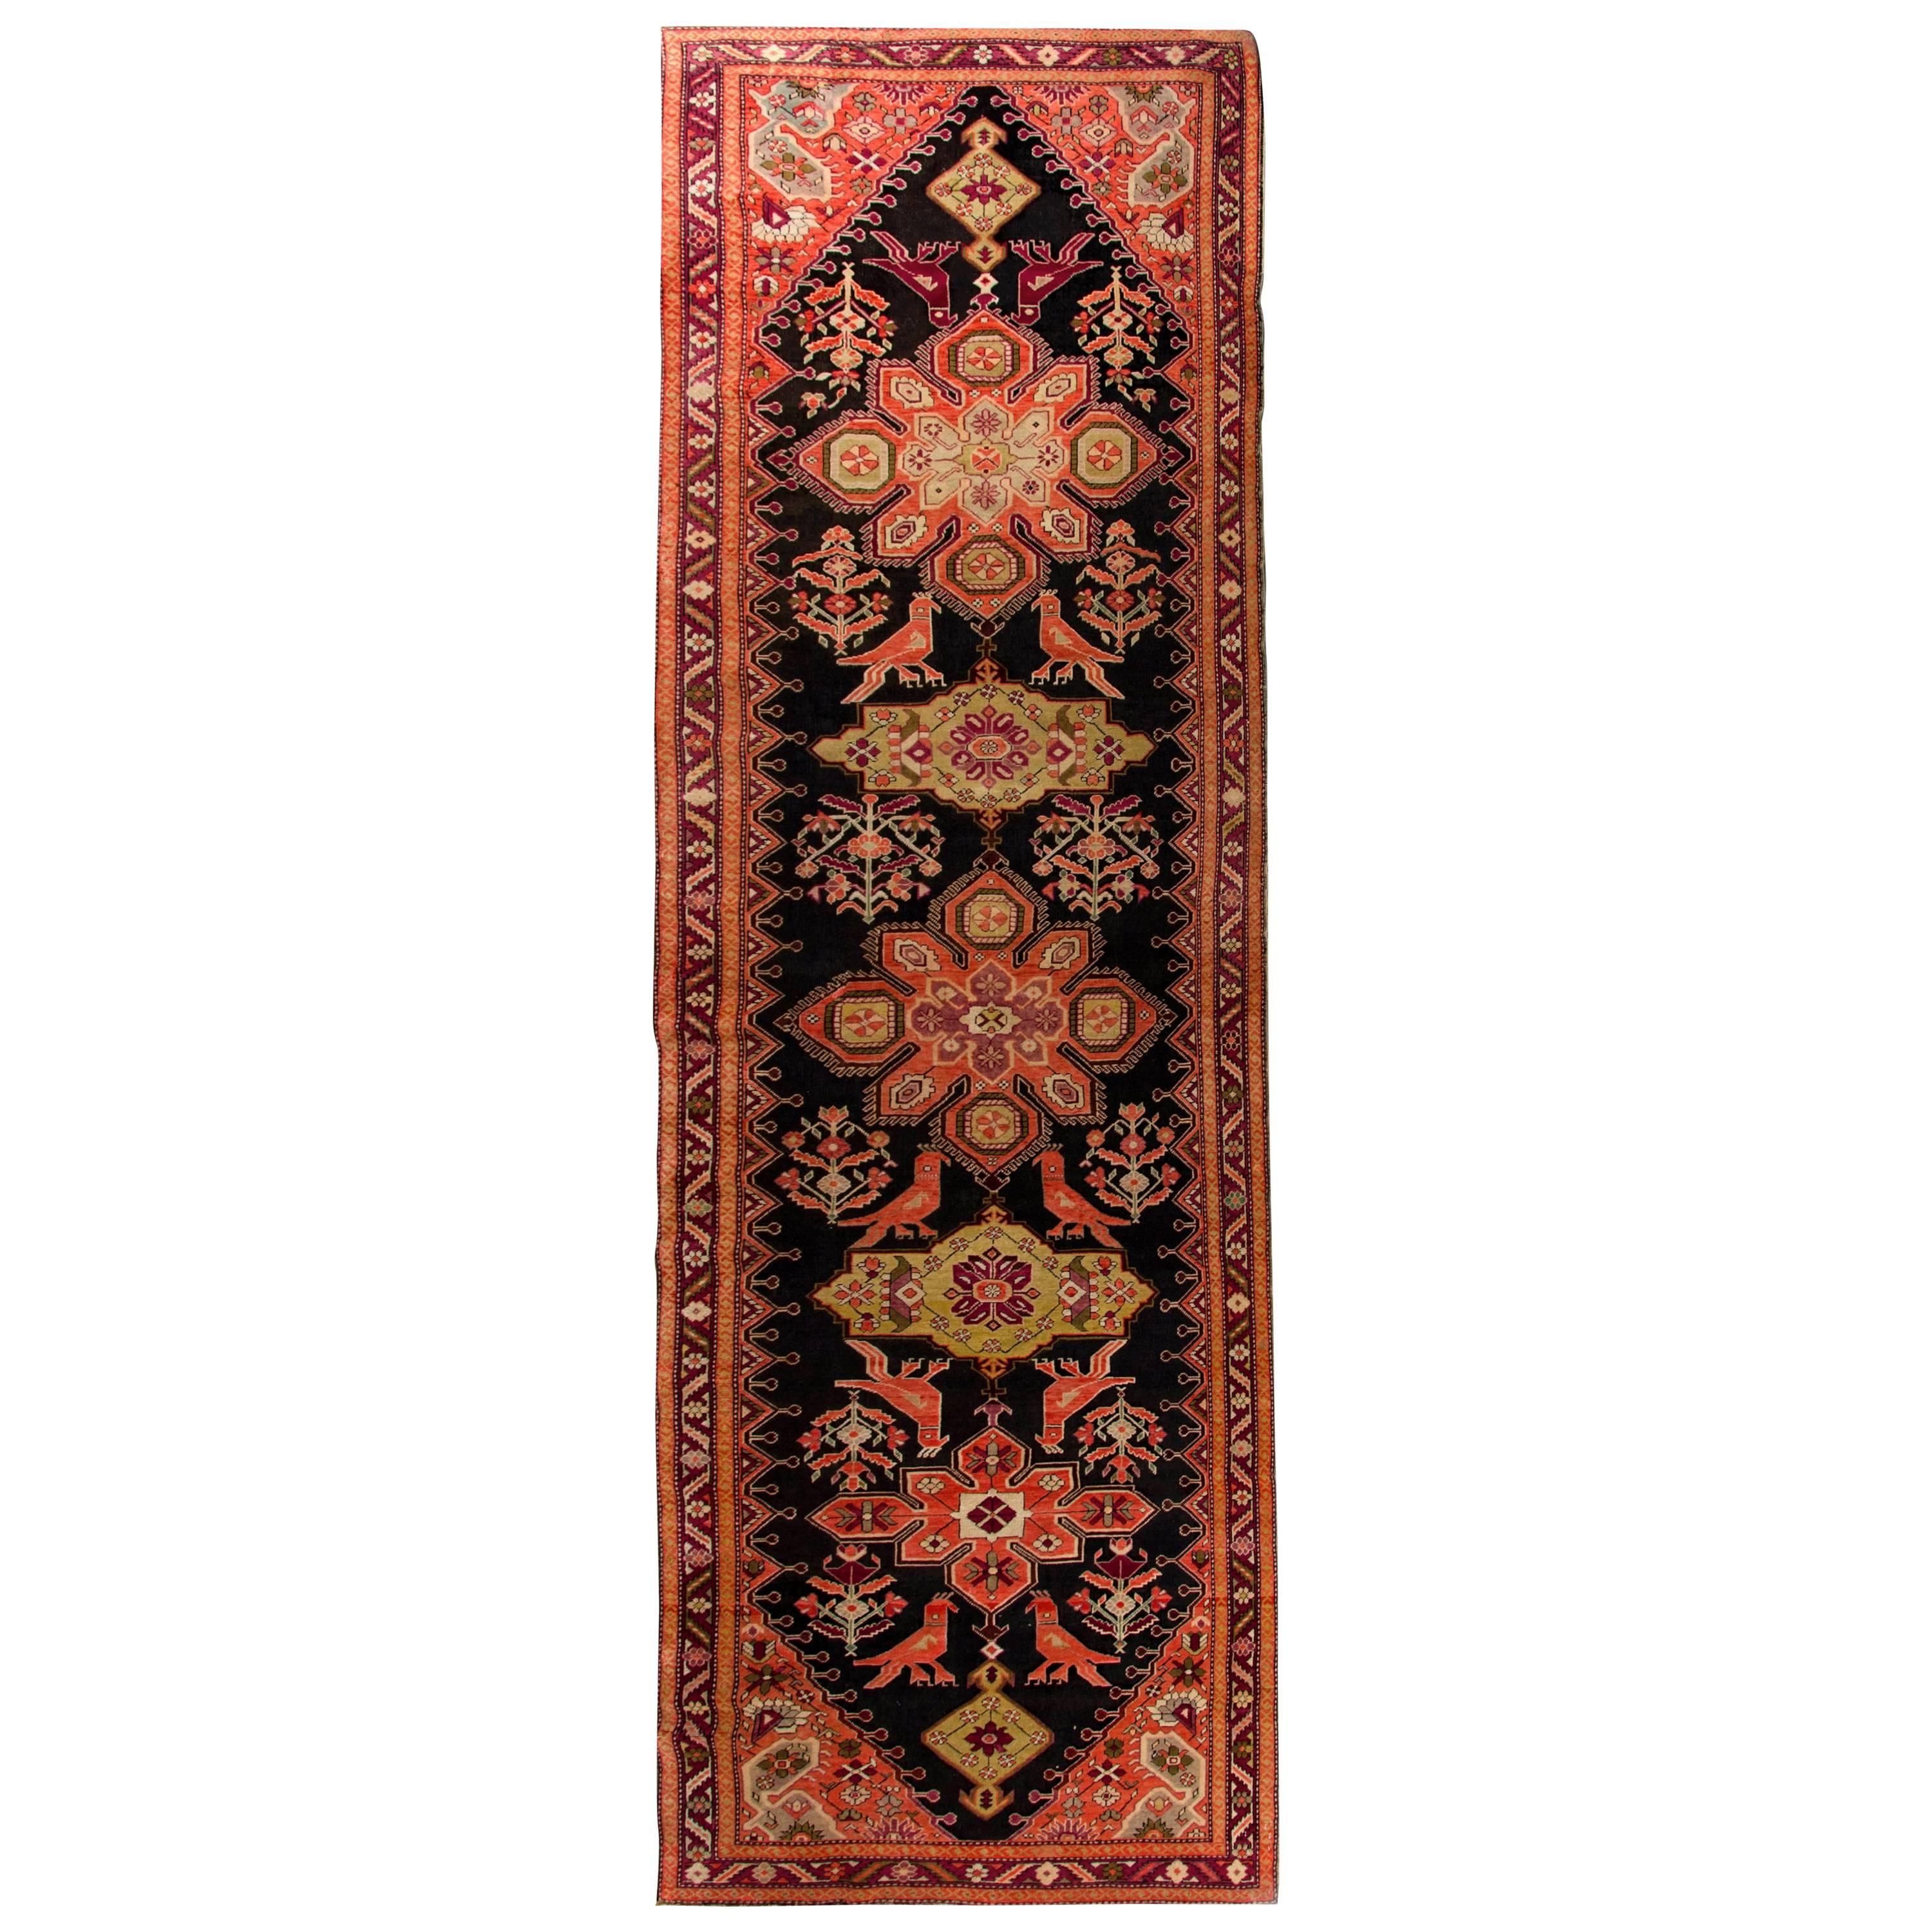 Antique Persian Rugs, Karabagh Carpet Runners from Caucasus